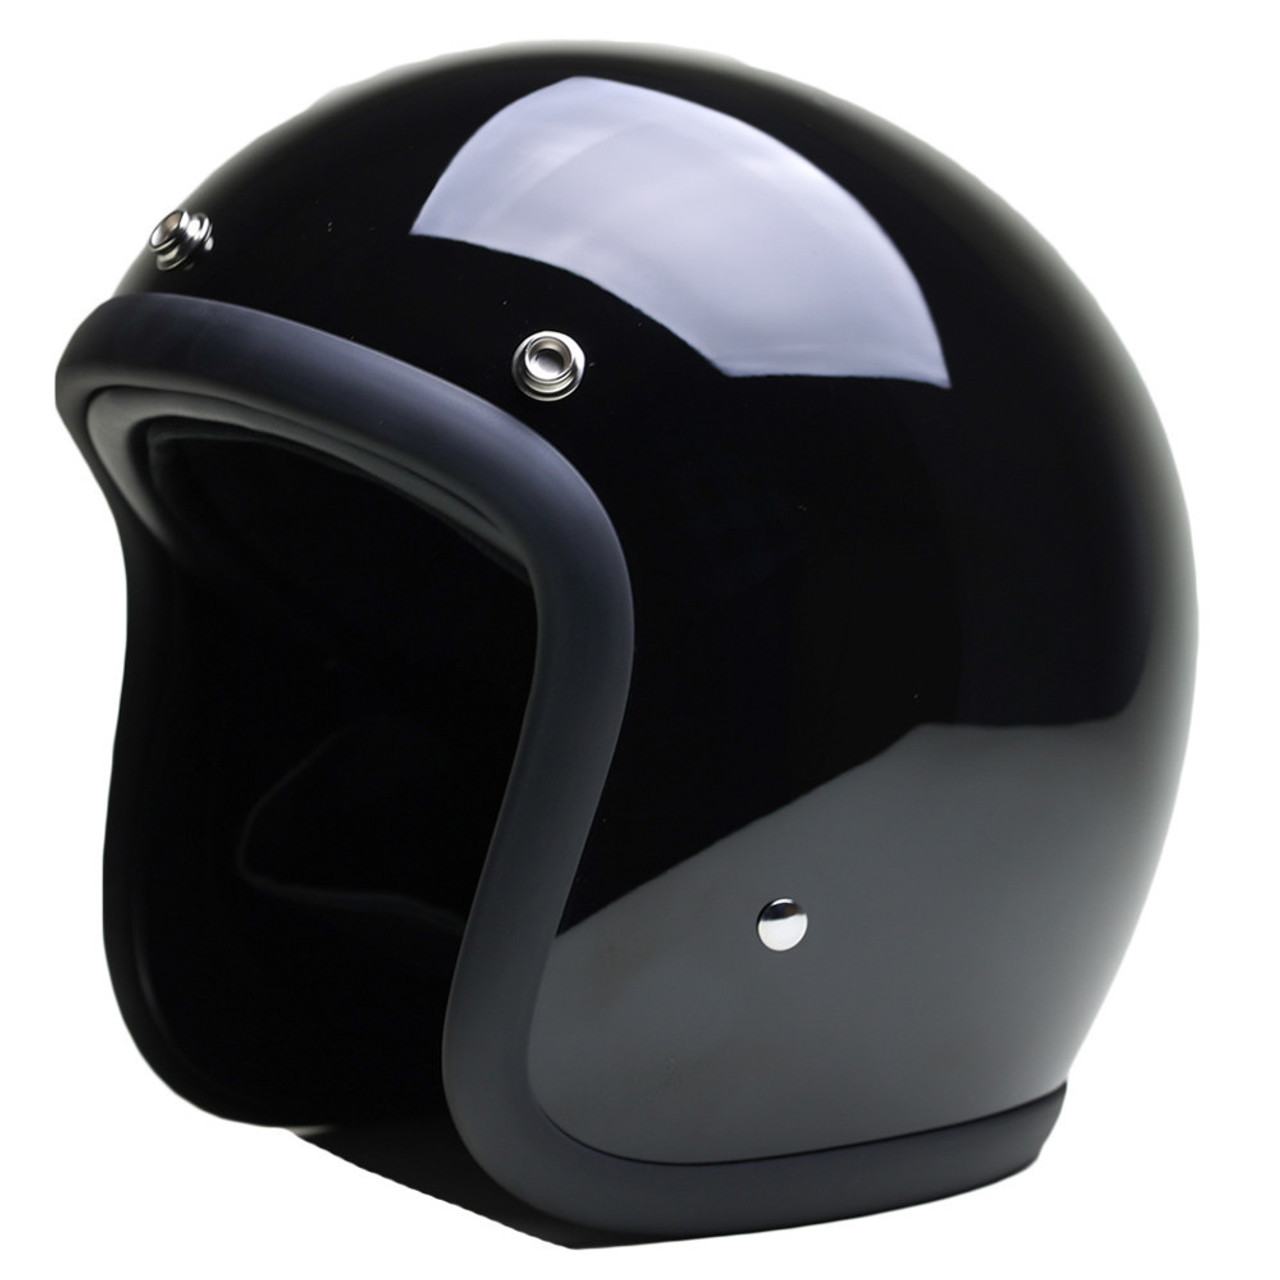 Mini Motorcycle Helmets Keychain Cute Safety Helmet Accessories